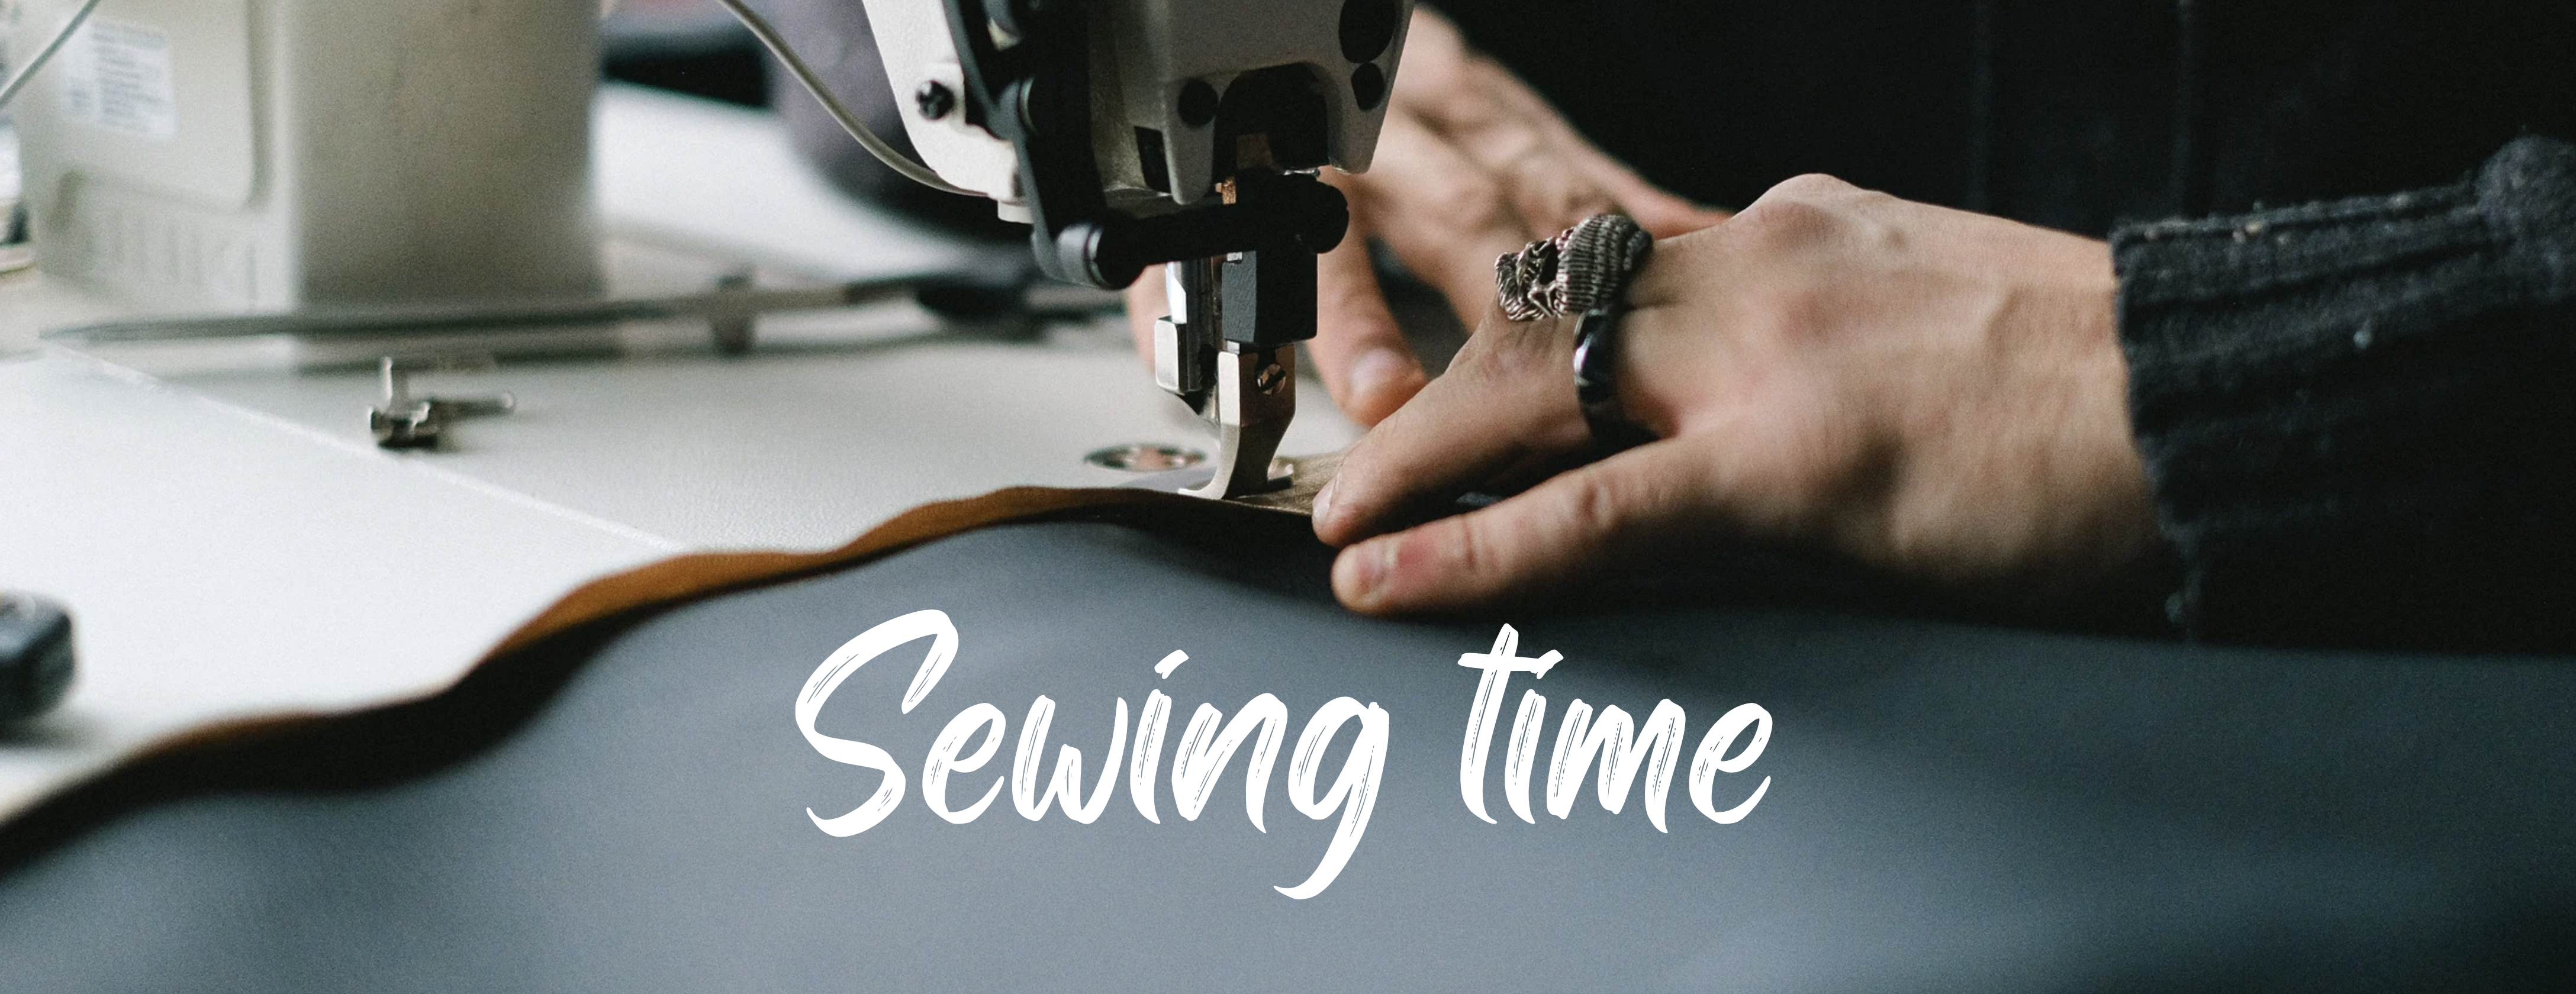 sewingtime